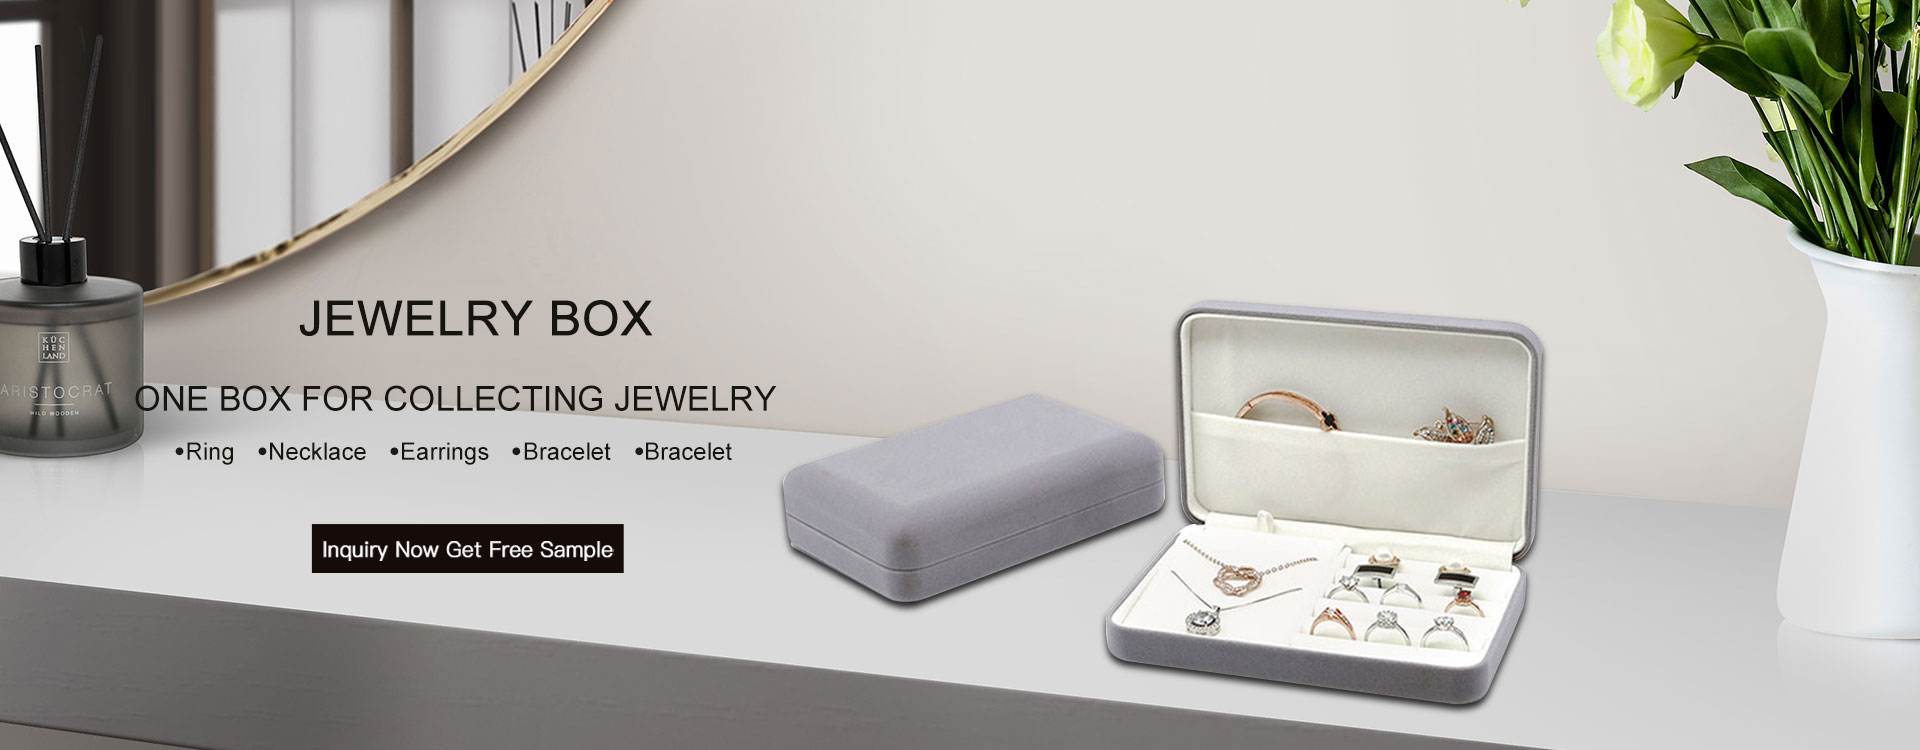 China Jewelry Box Manufacturers